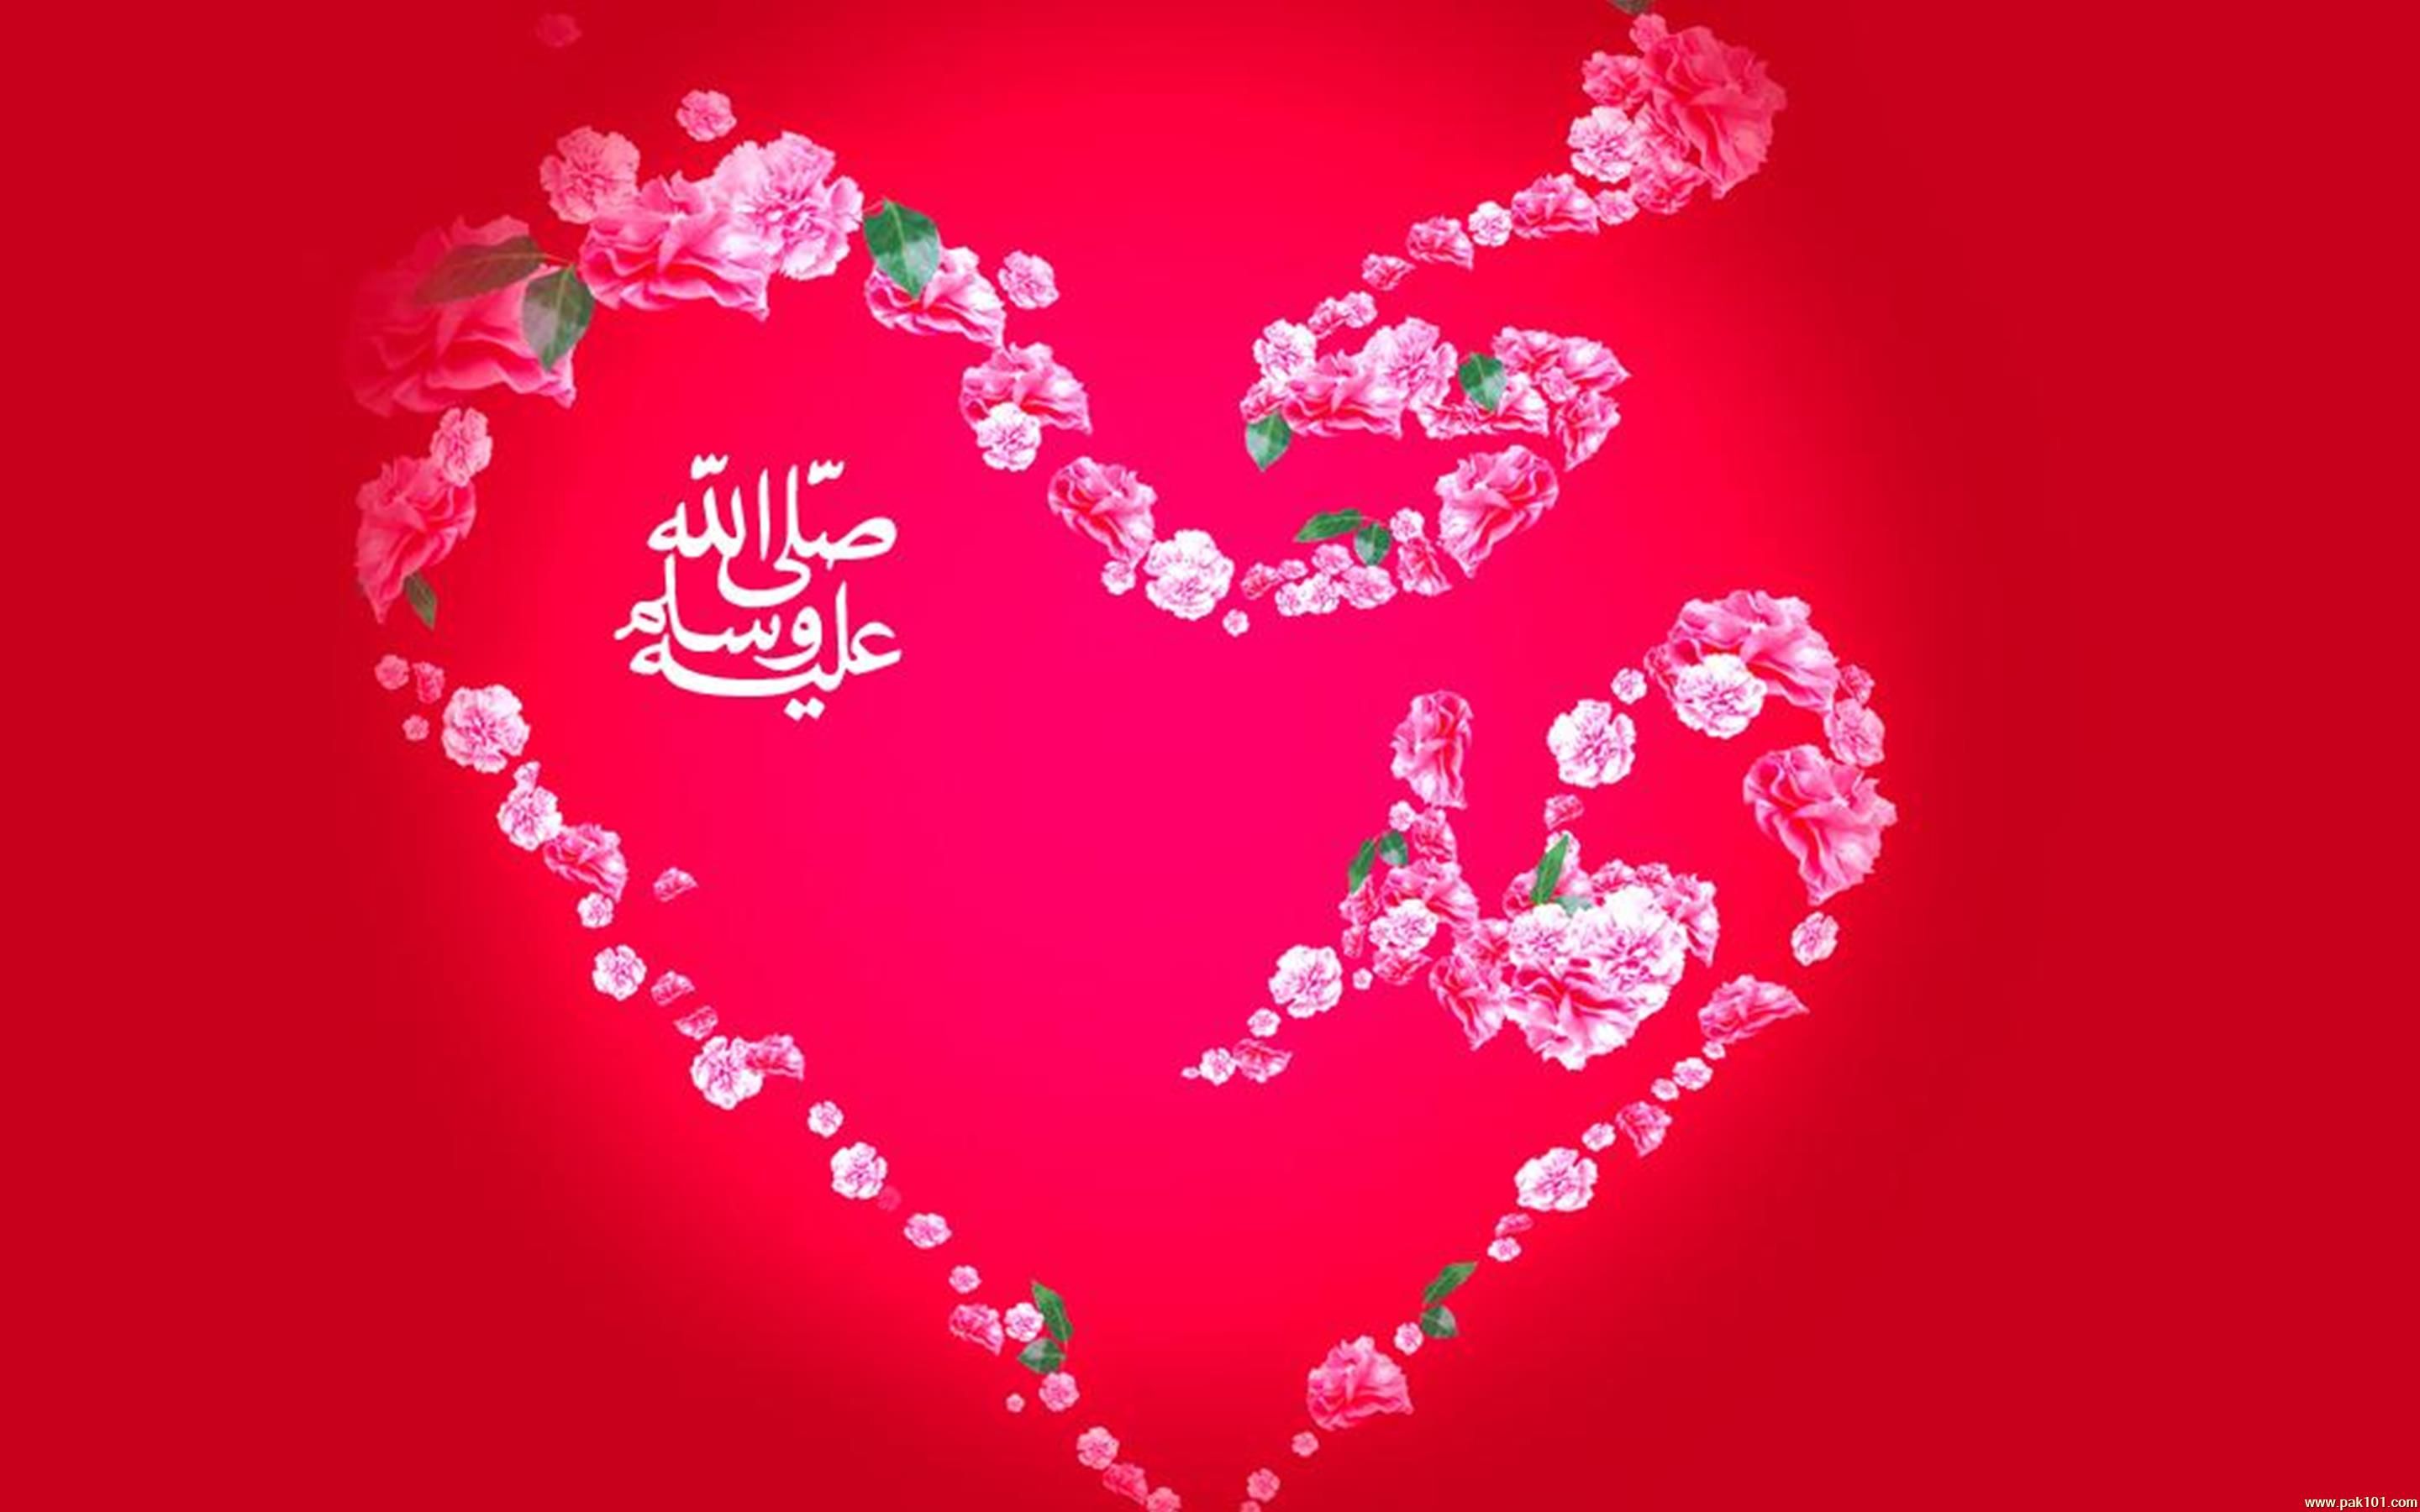 Wallpaper > Islamic > Prophet Muhammad (P.B.U.H) high quality! Free download 1024x768